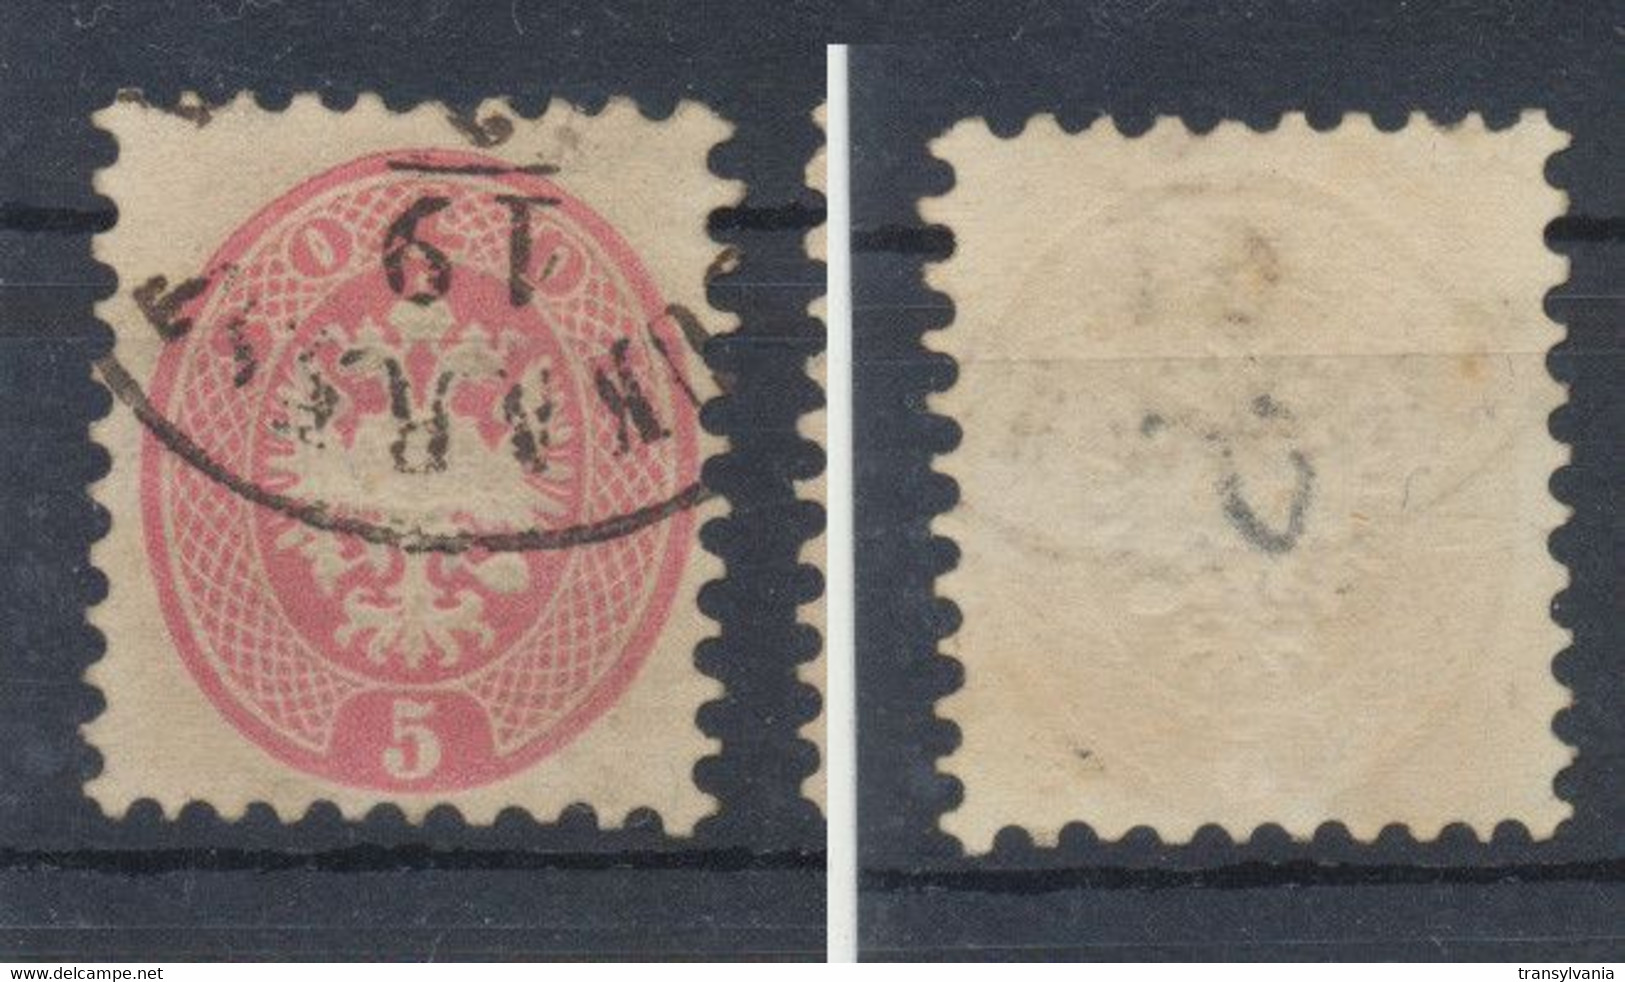 Romania 1864 Austria Post In Levant 5 Kreuzer Stamp With Bukarest Rekomandirt Cancellation Applied At Bucuresti - Occupations